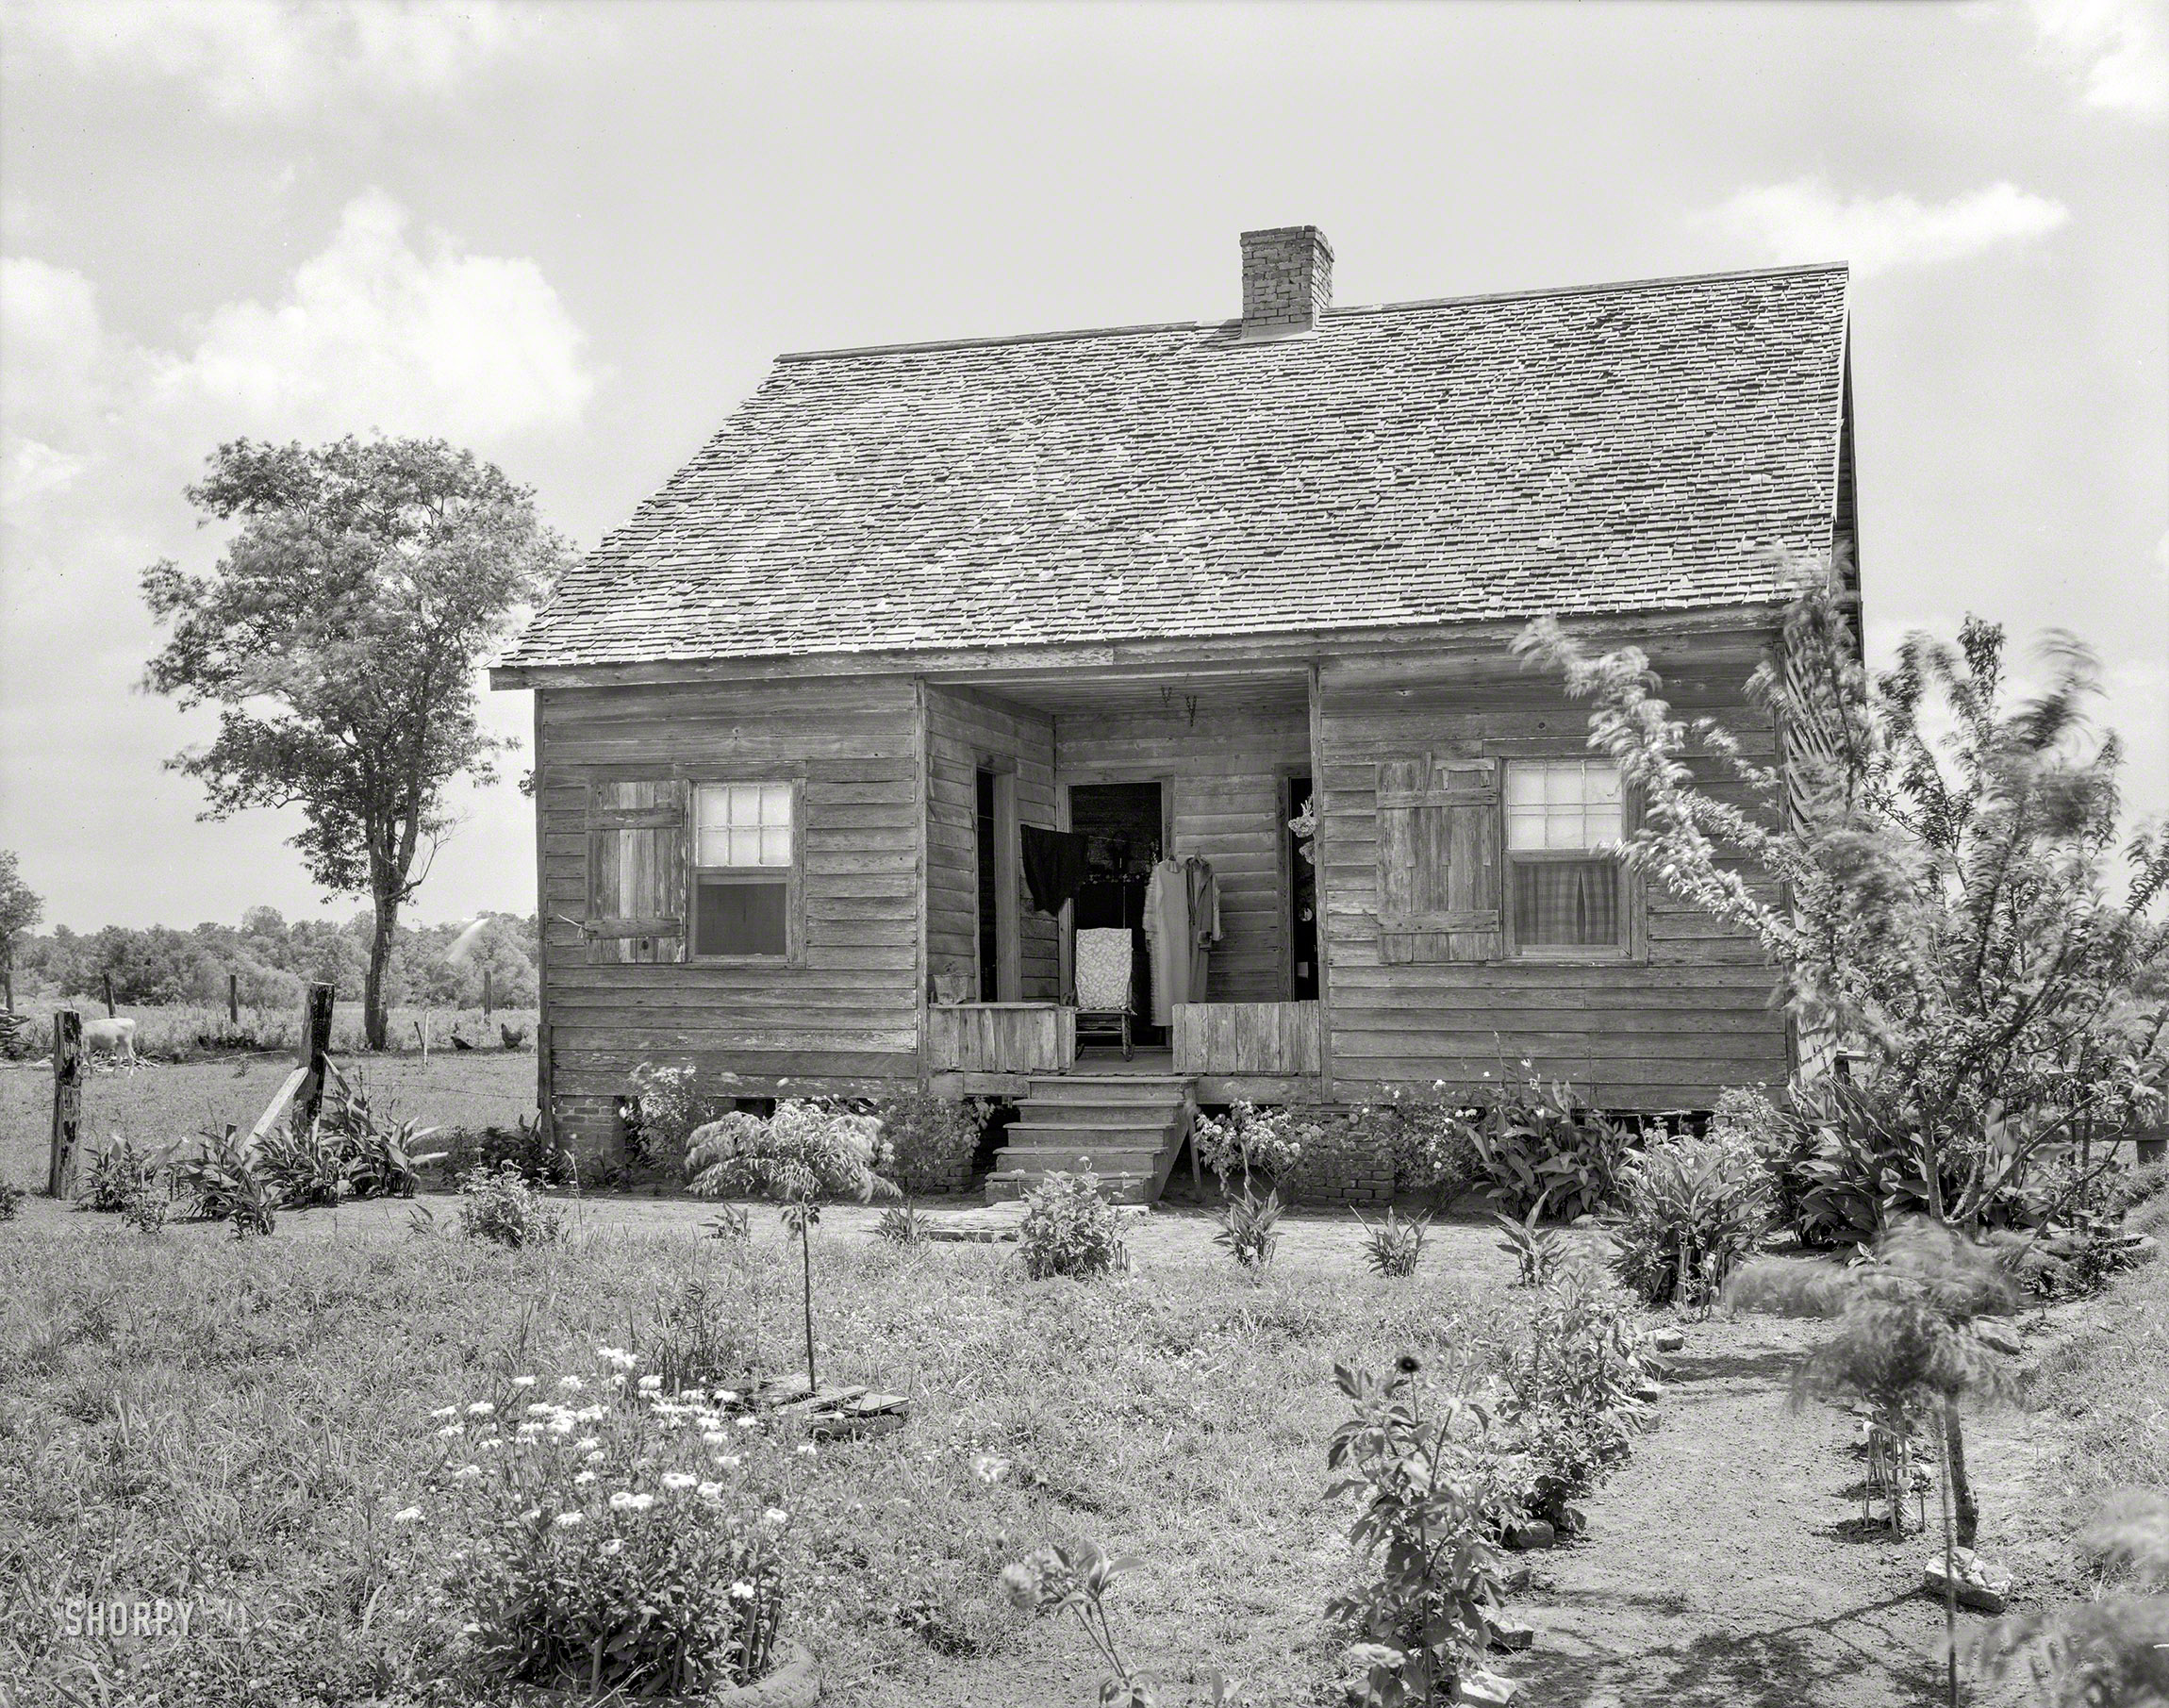 1938. "Thebideau (Thibodaux?) cabin, Franklin vic., St. Mary Parish, Louisiana. Related name: Mrs. Streva." Photo: Frances Benjamin Johnston. View full size.